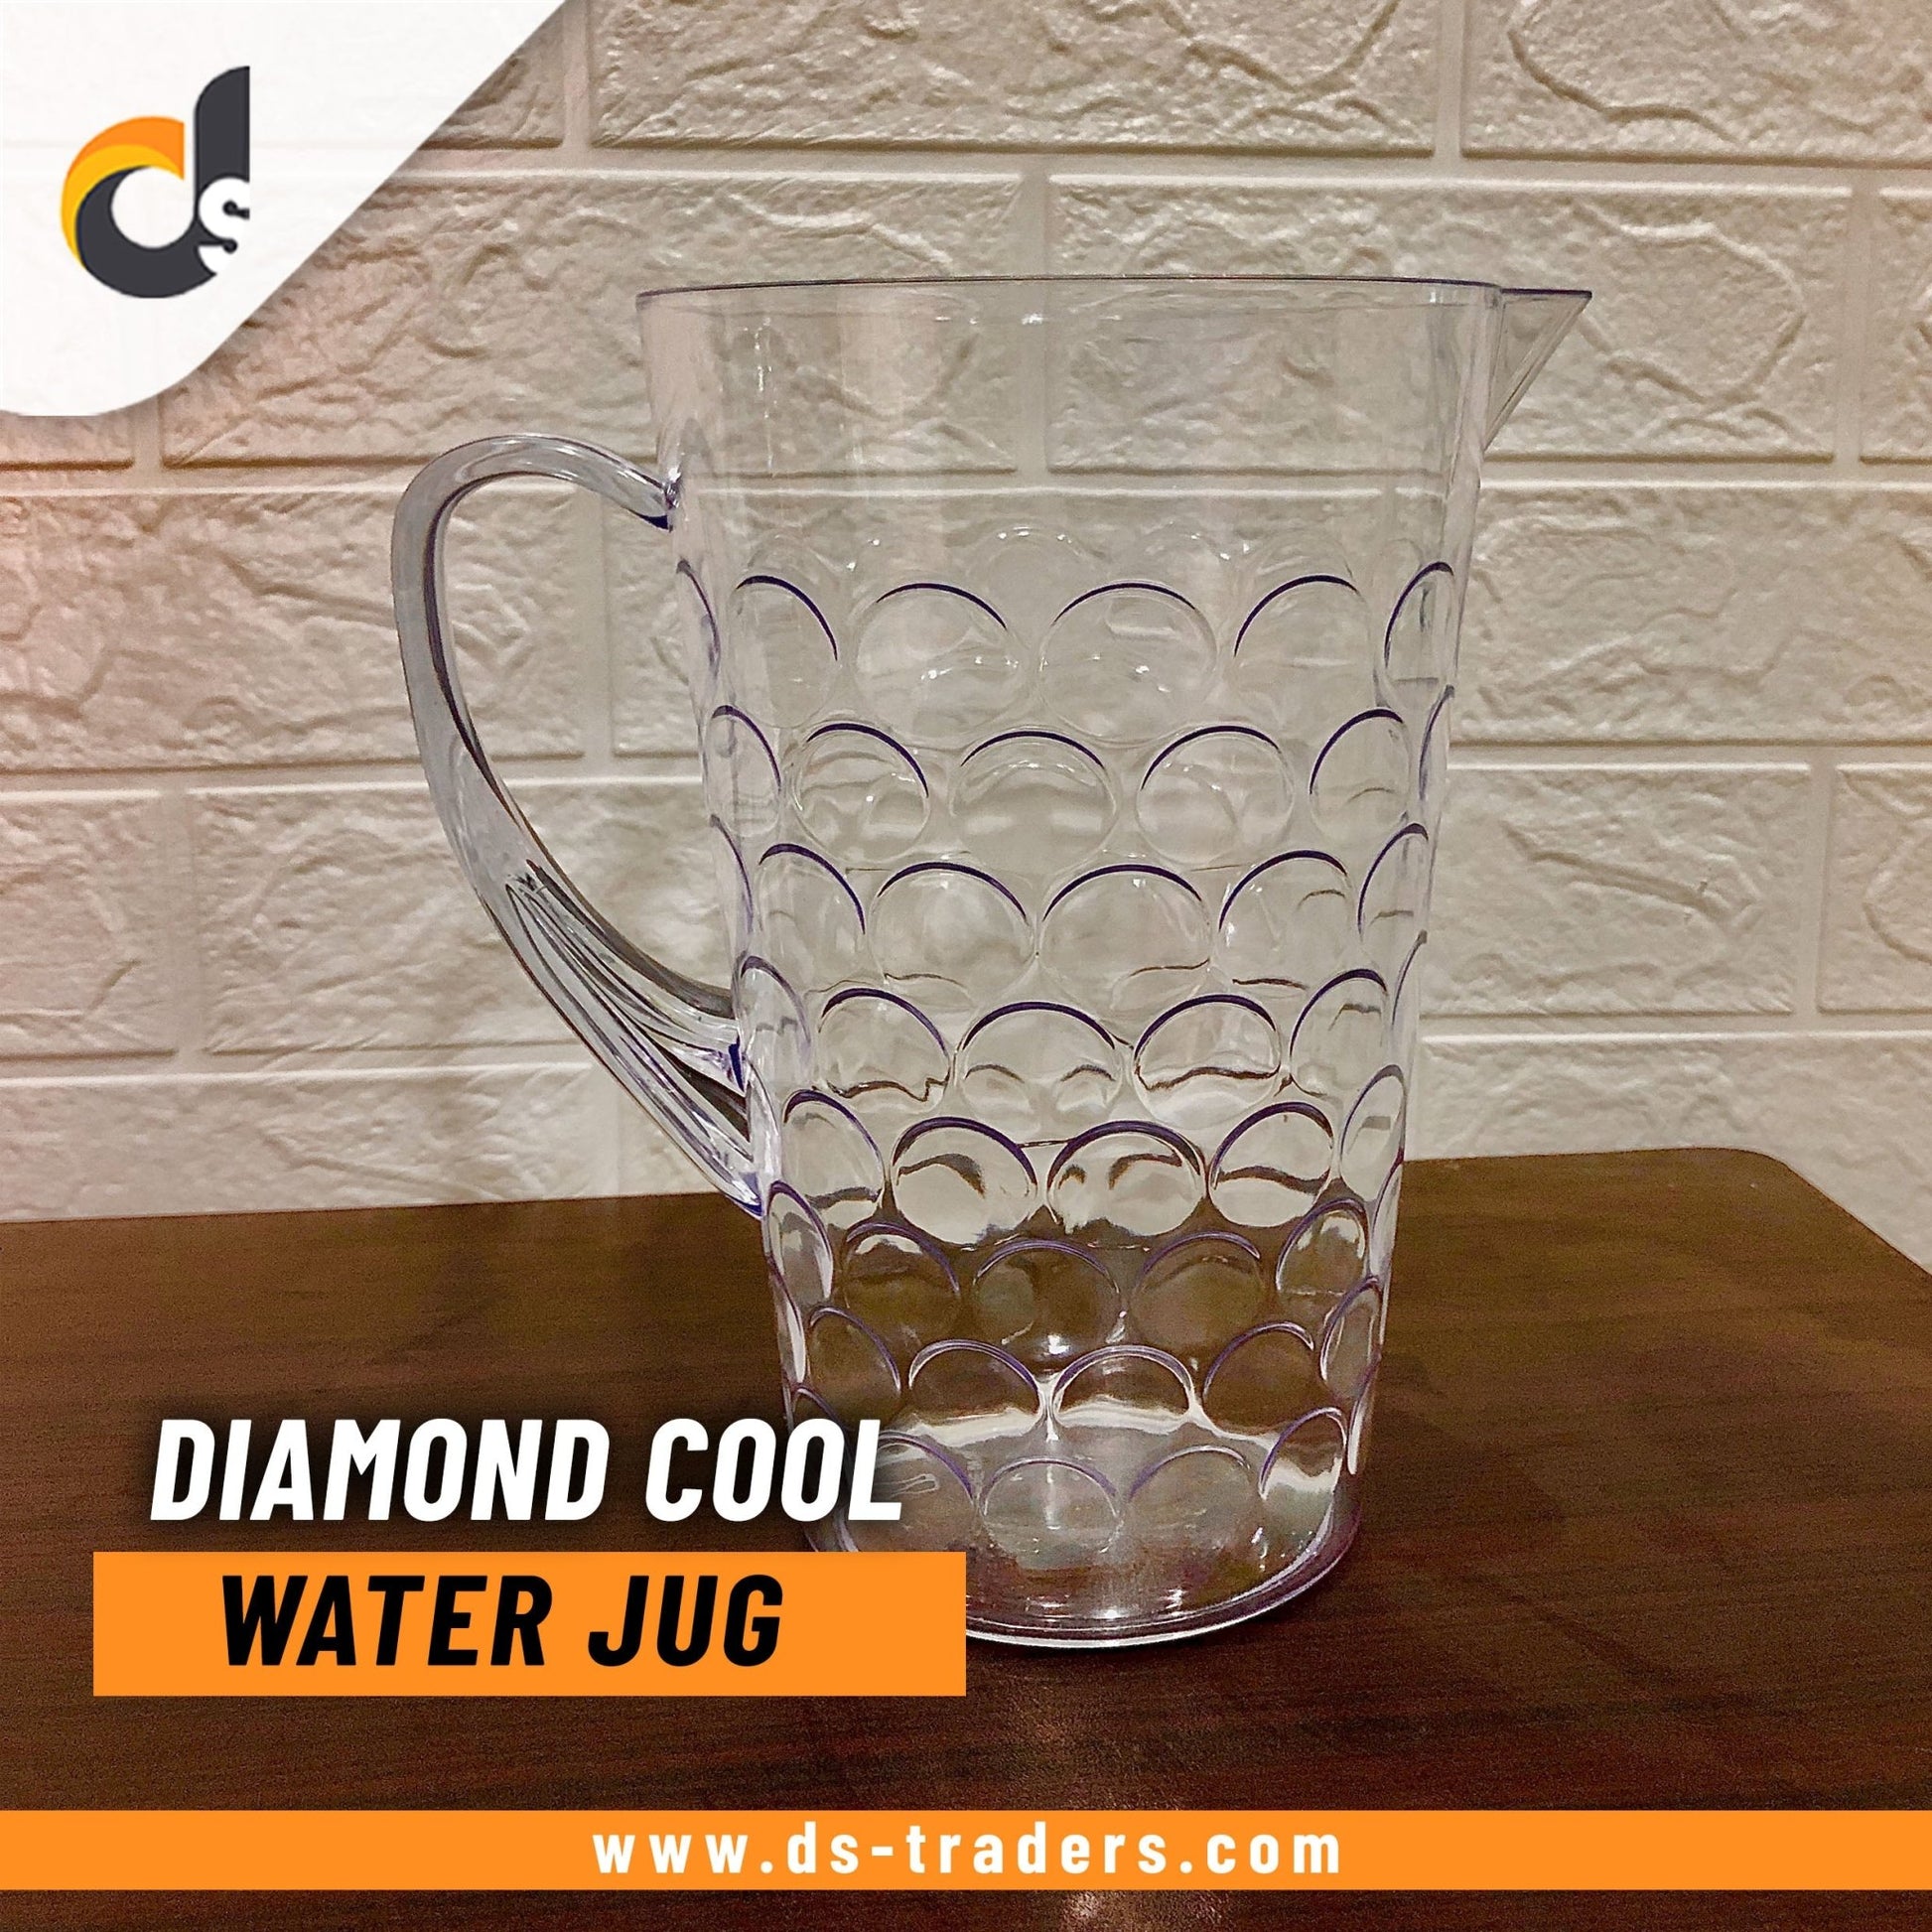 Diamond Cool Water Jug - DS Traders